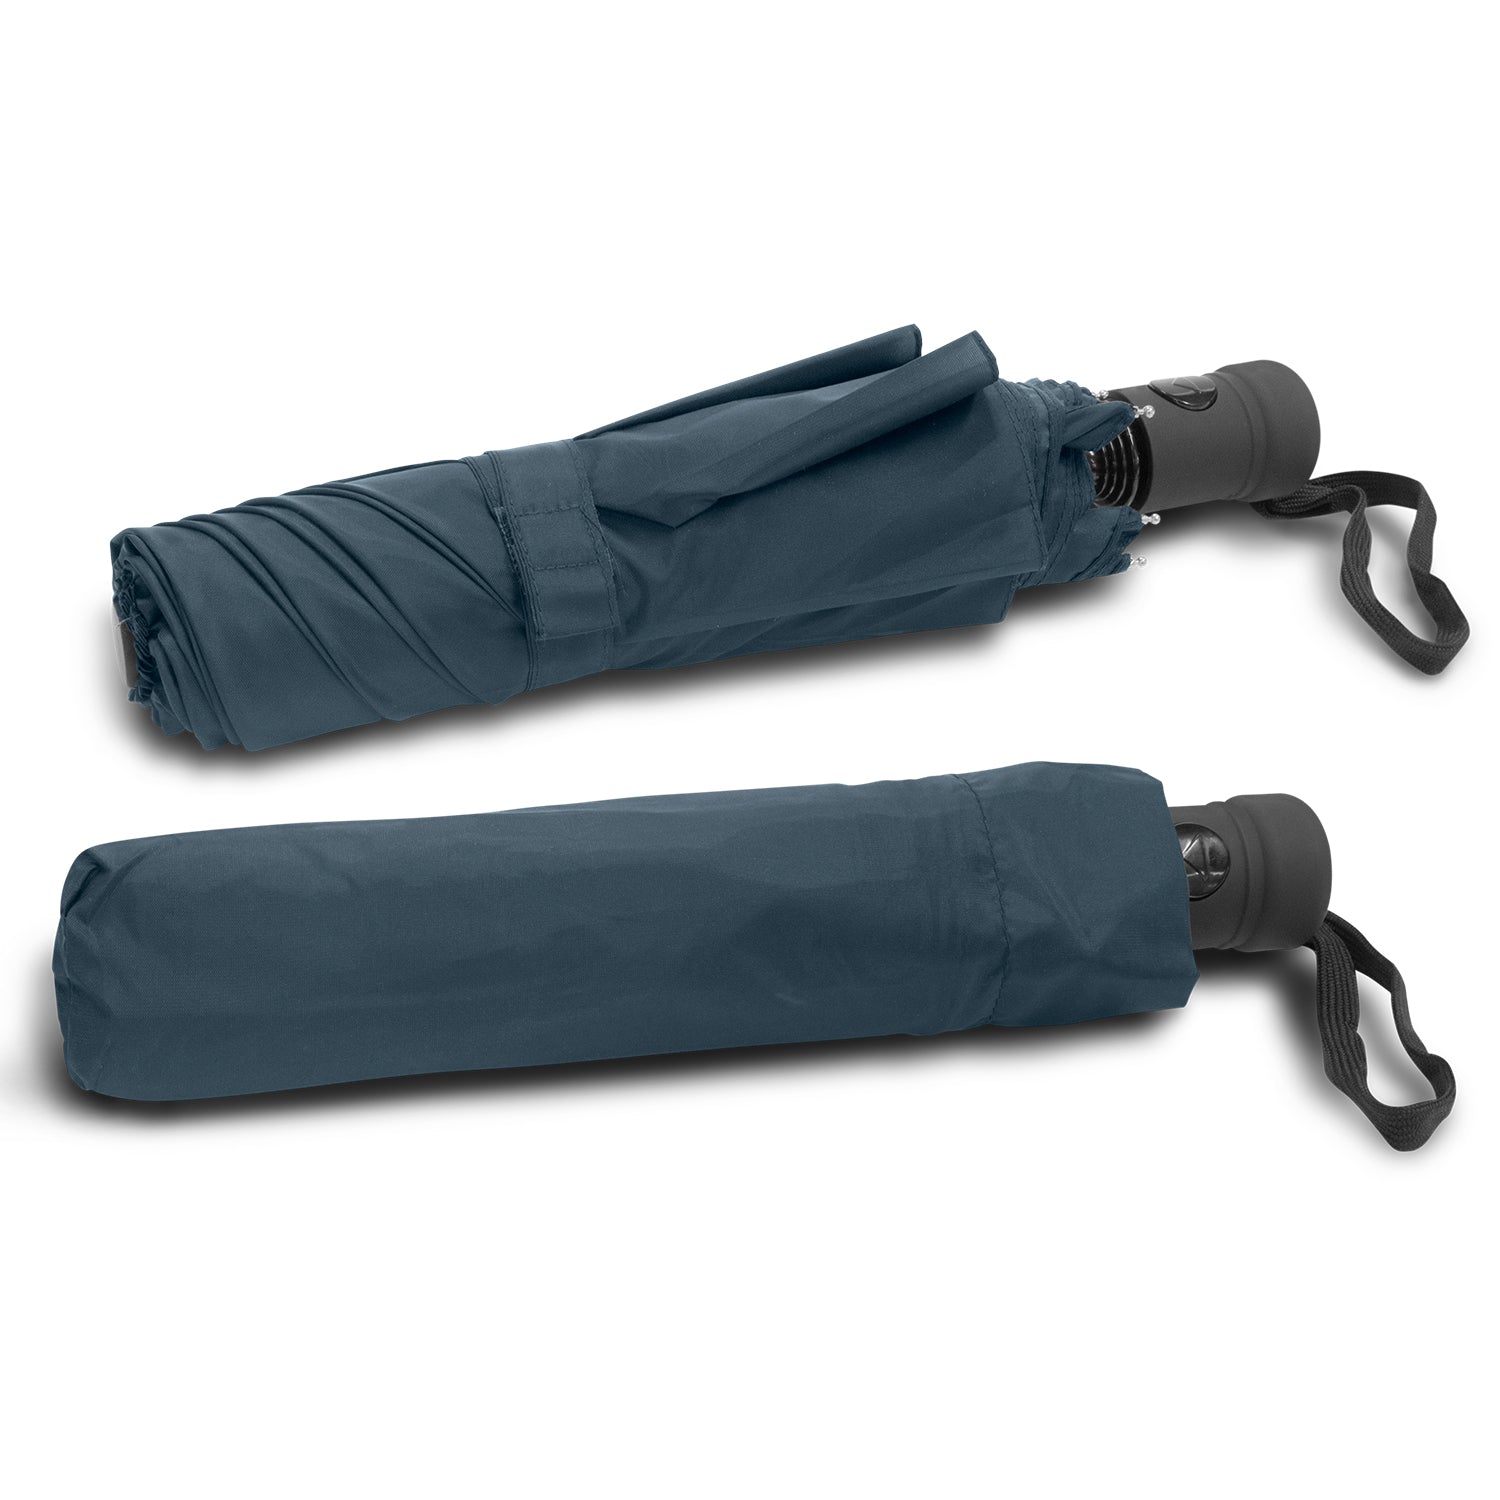 PEROS-TRI-FOLD-COMPACT-Umbrella-Compact-Travel-Umbrella-collapsible-steel-shaft-navy-blue-2